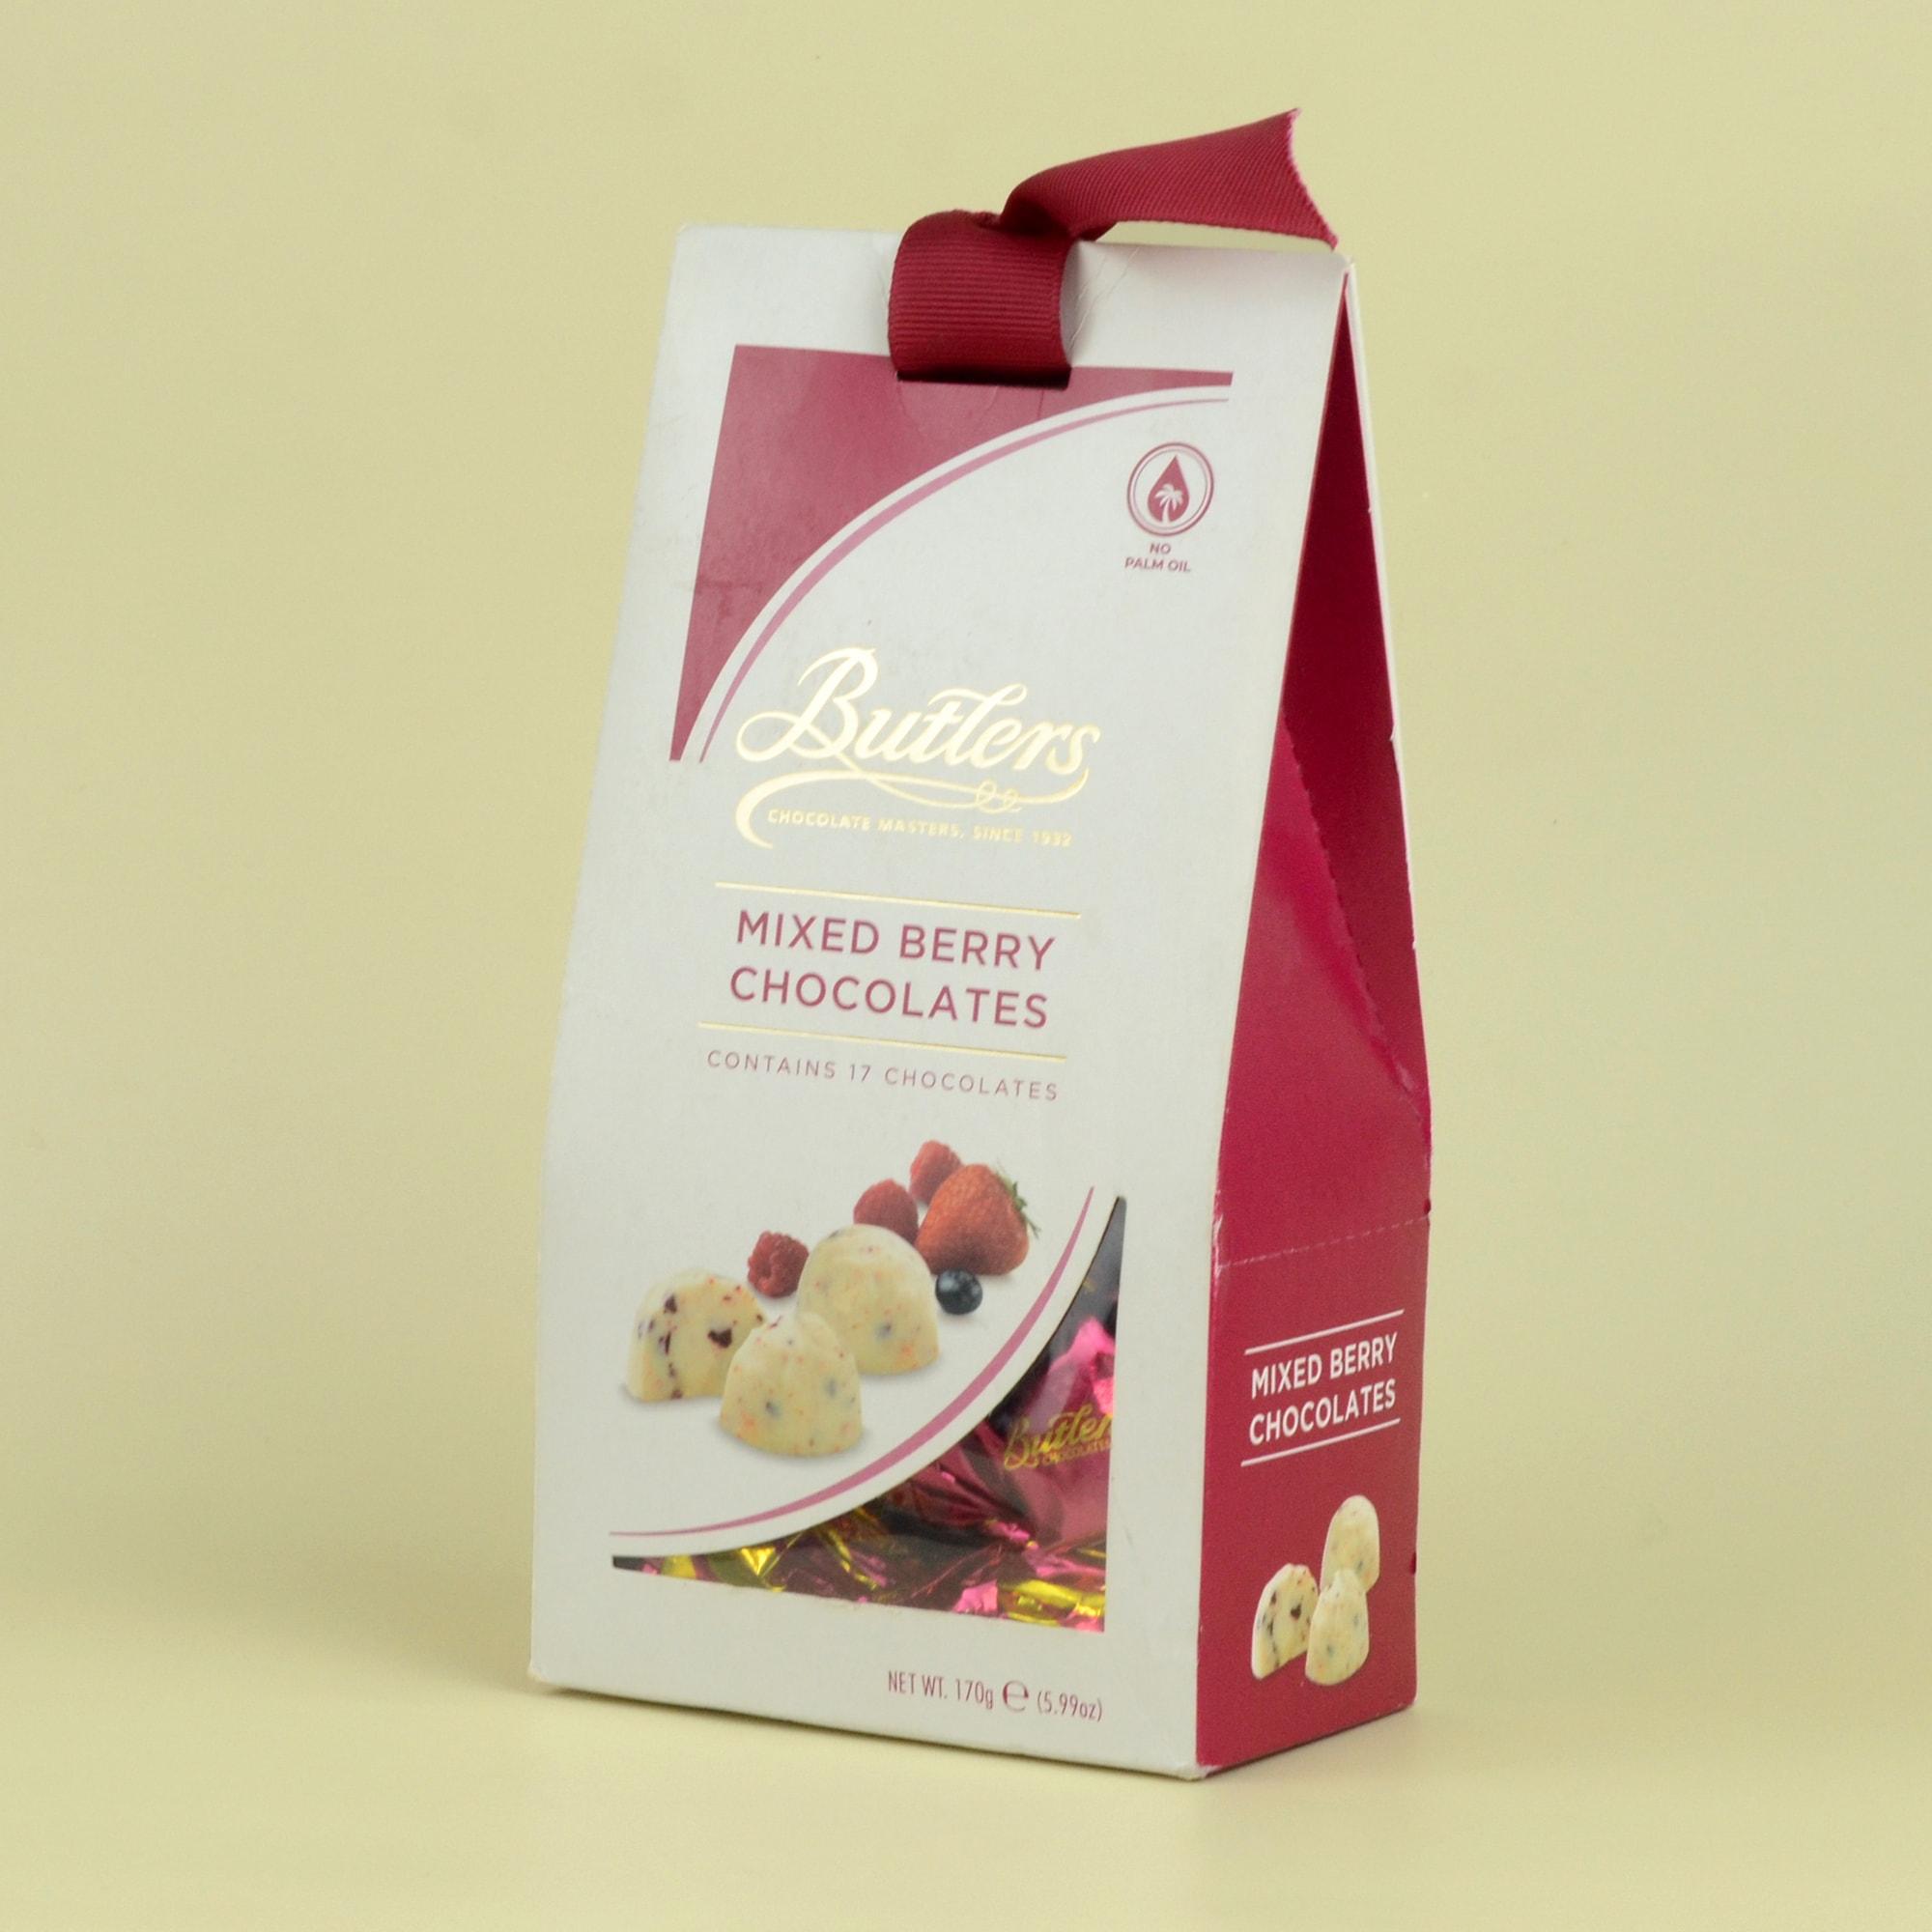 Butler Mixed Berry Chocolates